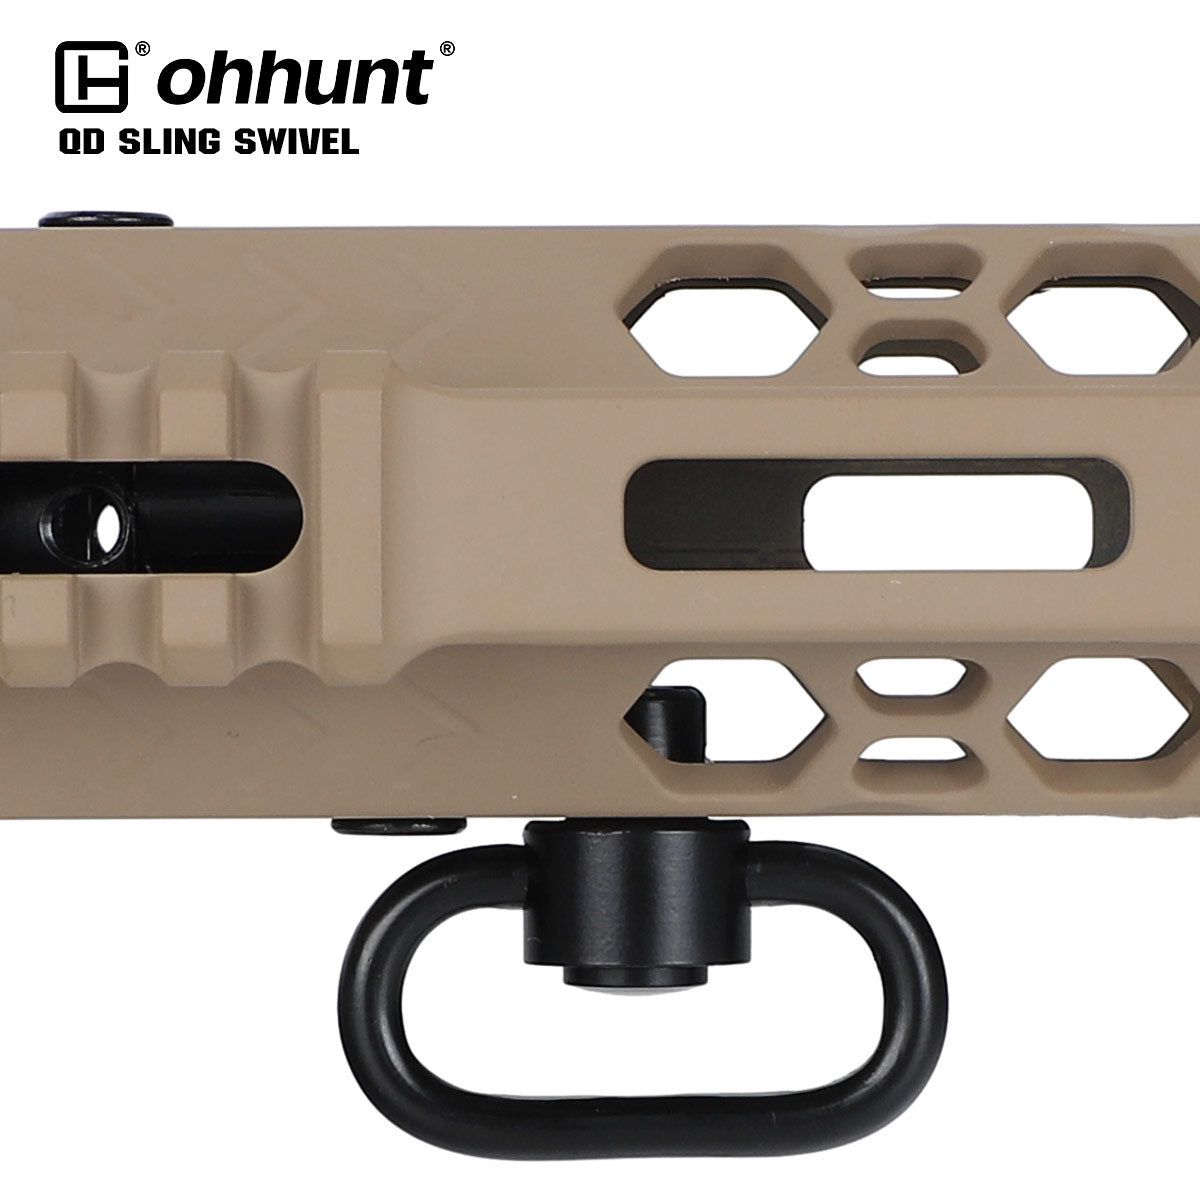 ohhunt® Heavy Duty 1.25" Push-button Quick Detach QD Sling Swivel